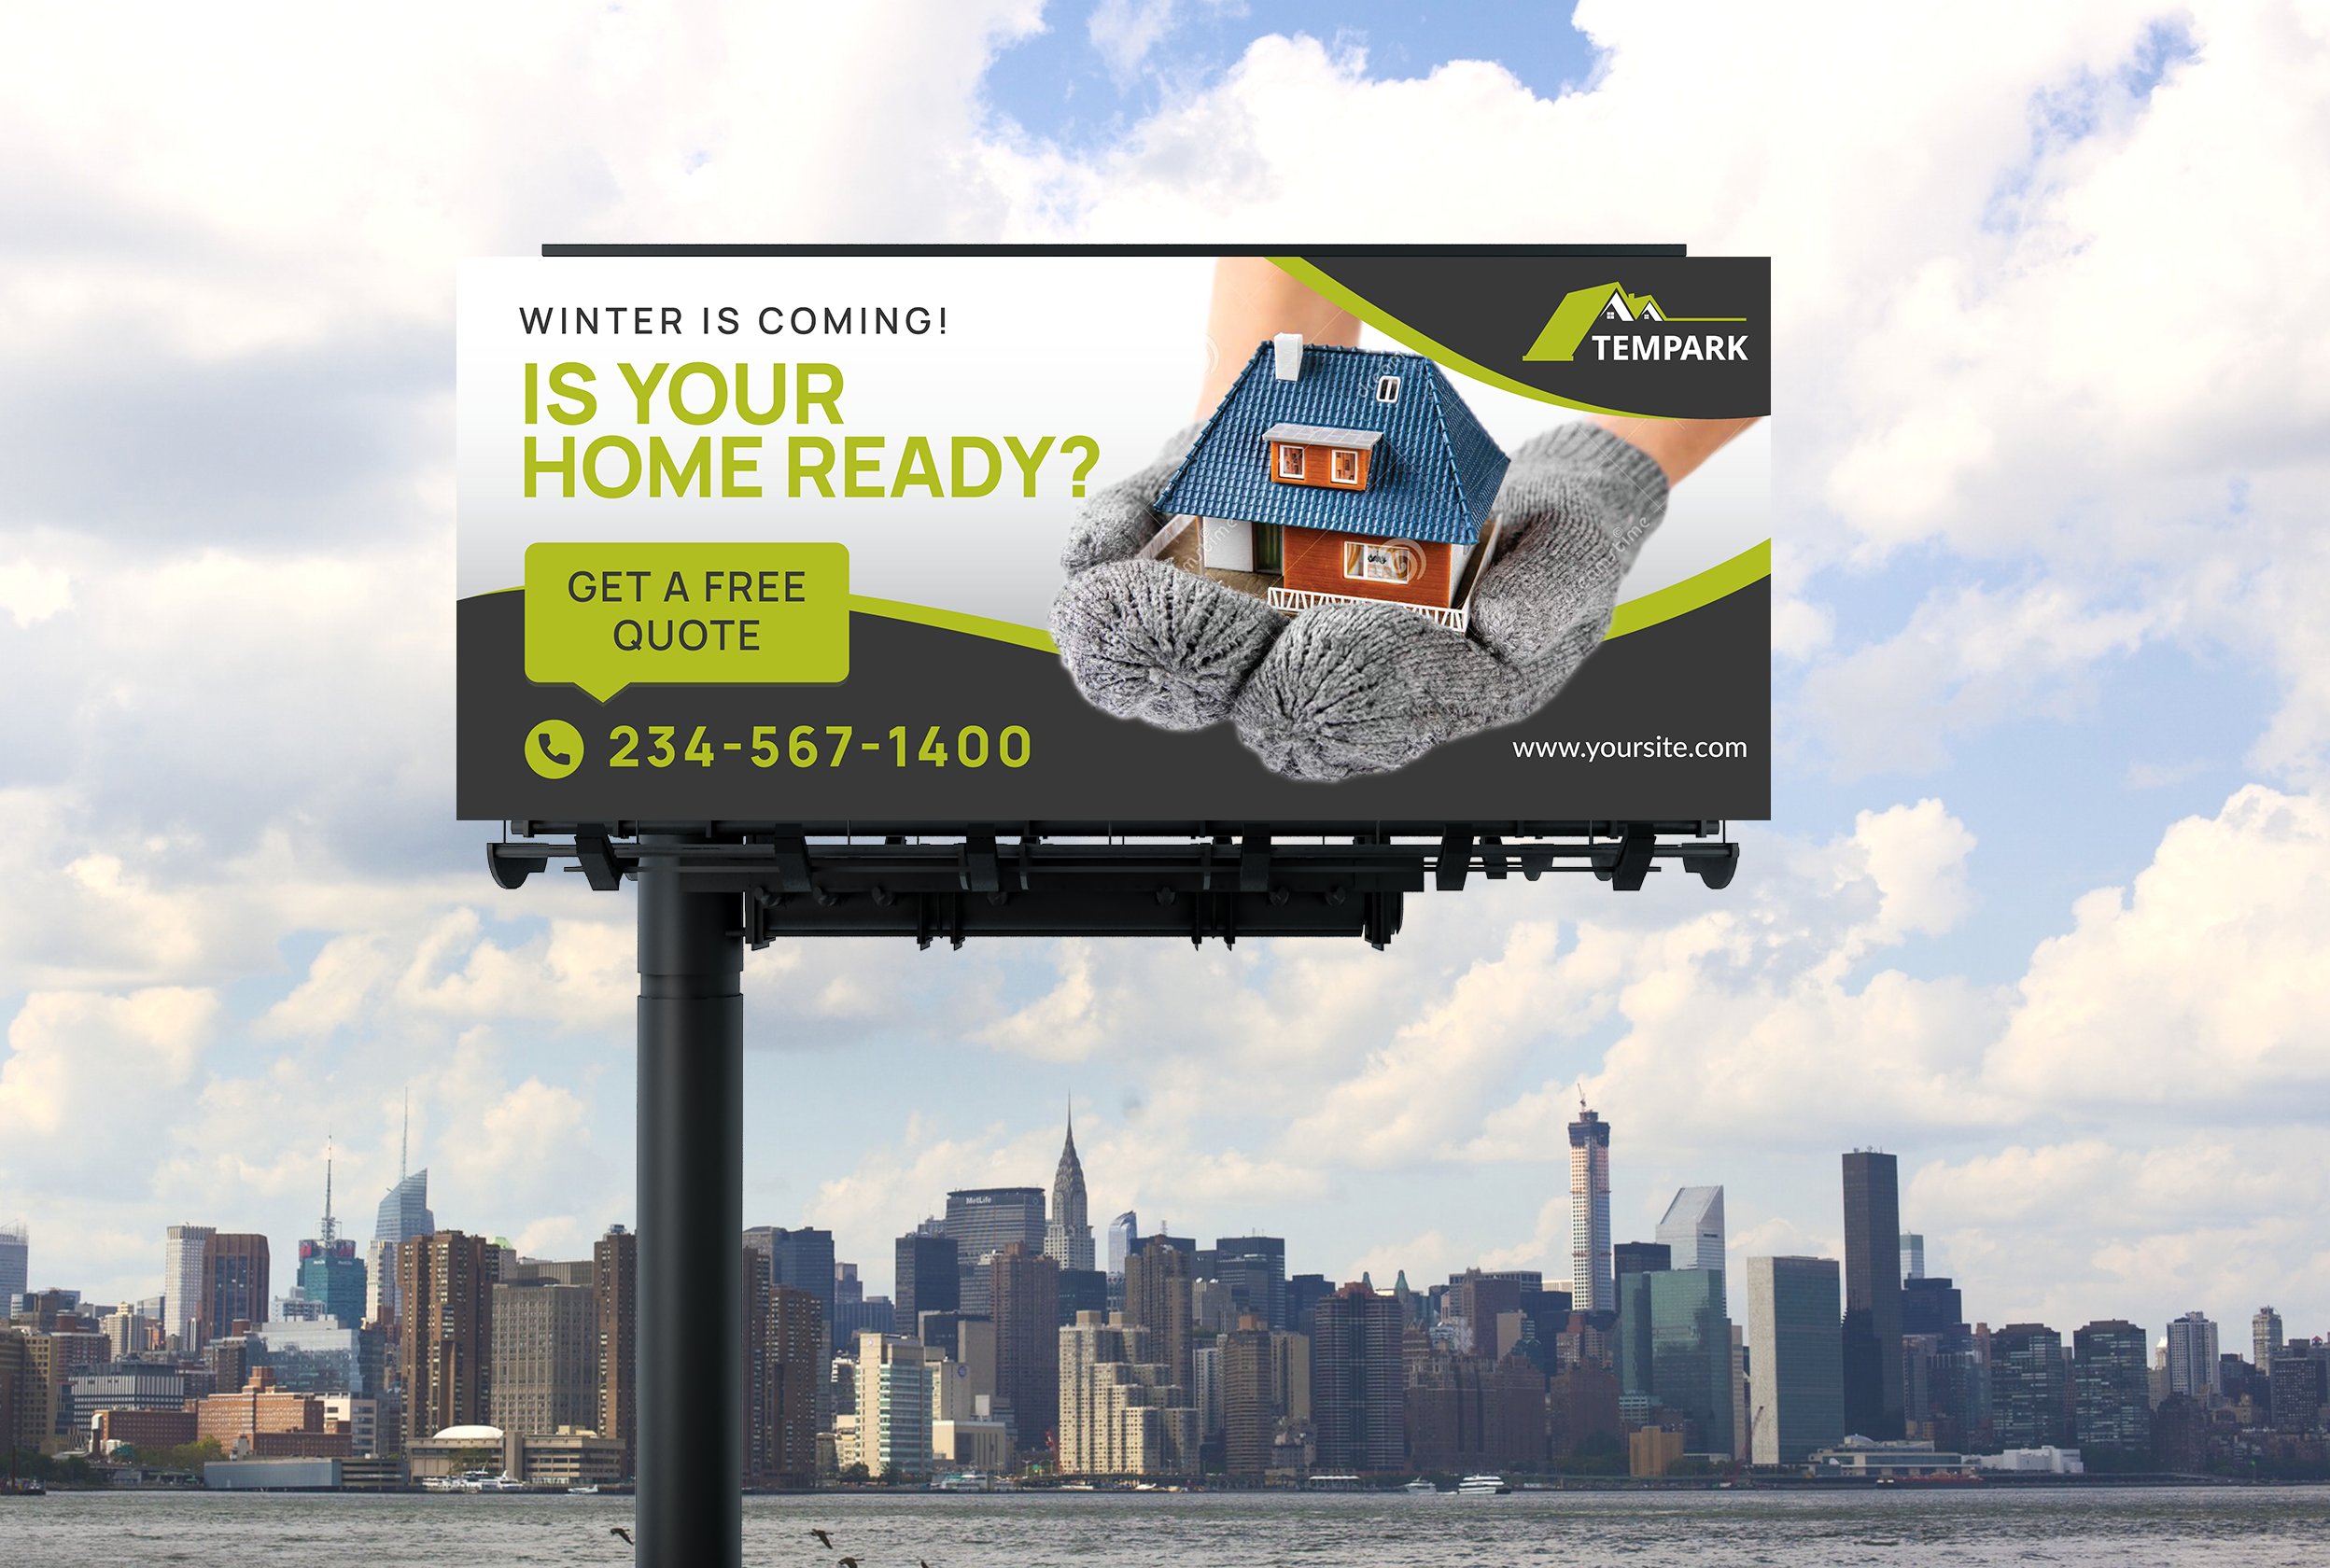 Home Insulation Service Billboard cover image.